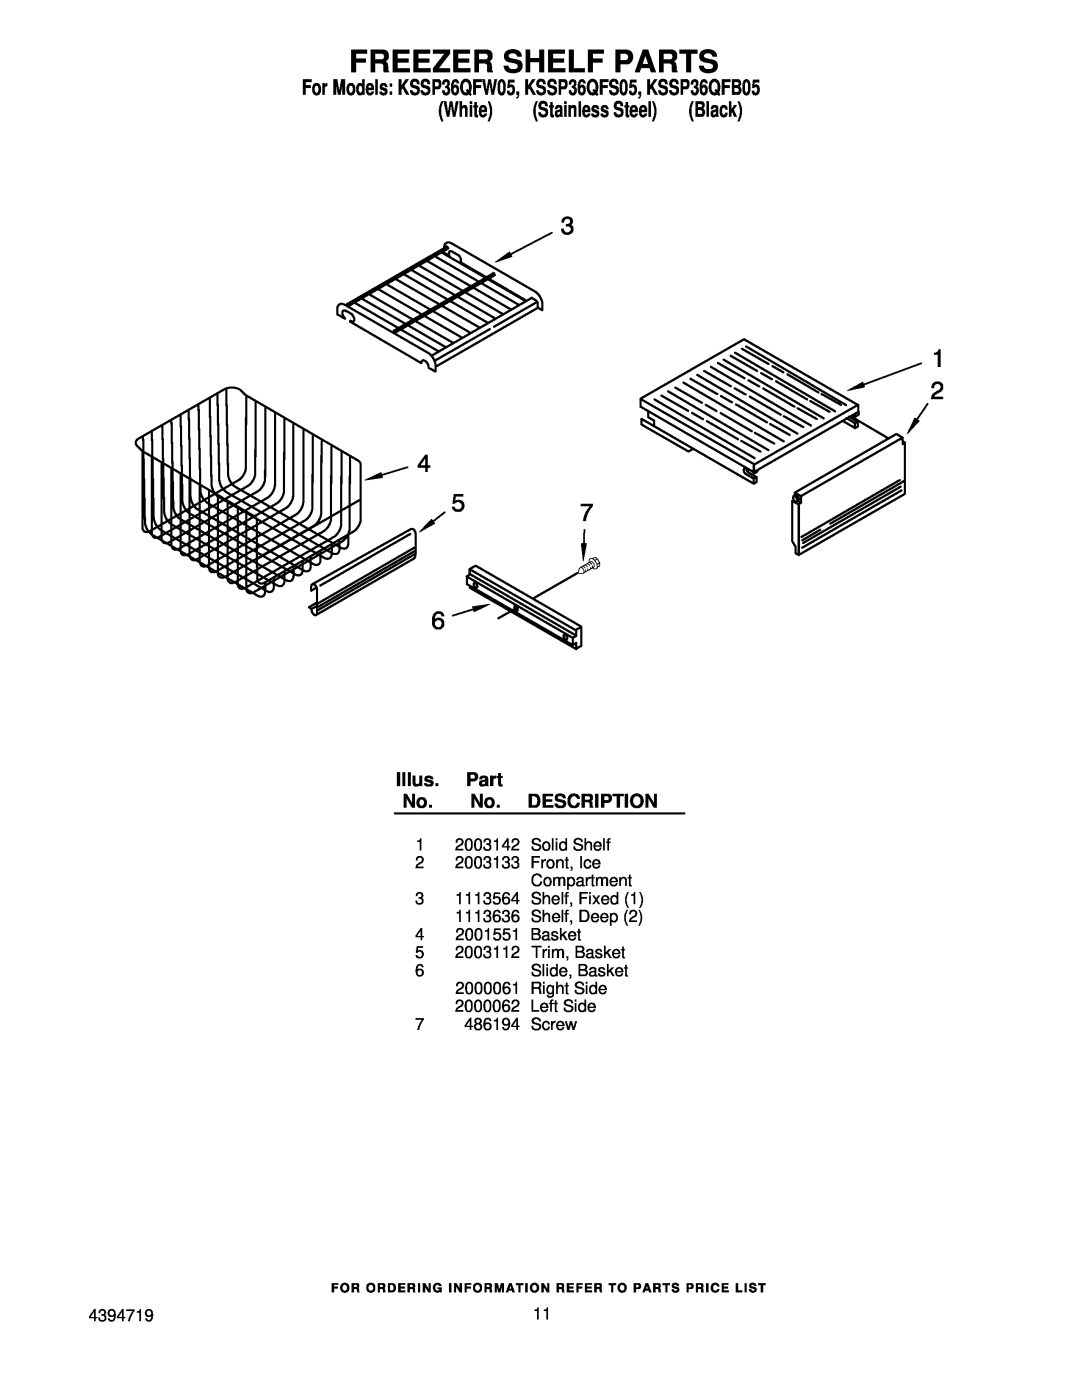 KitchenAid manual Freezer Shelf Parts, For Models KSSP36QFW05, KSSP36QFS05, KSSP36QFB05, White, Stainless Steel, Black 